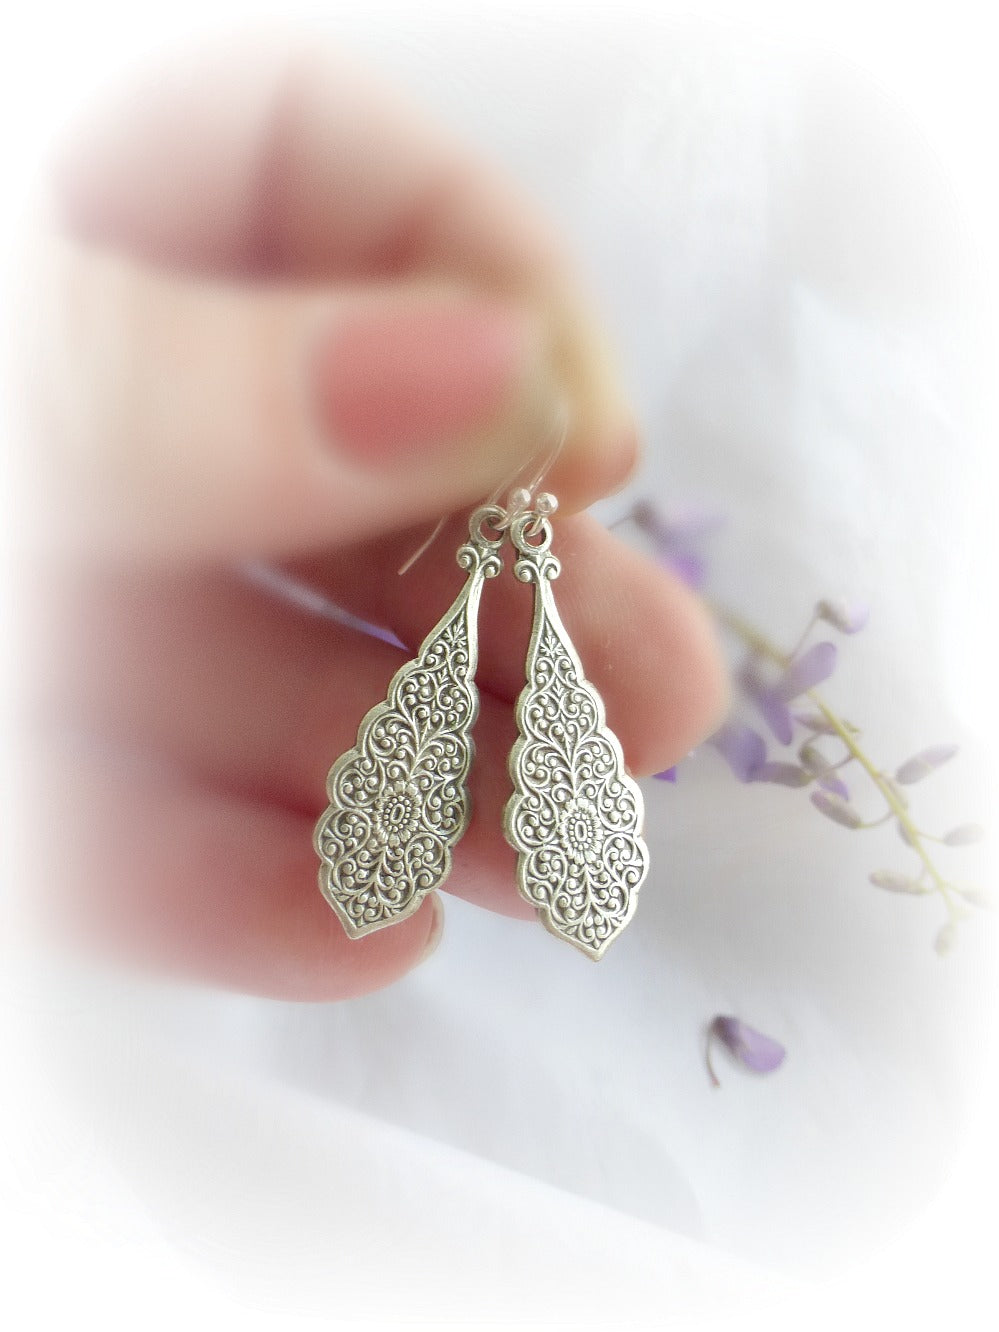 Silver Filigree Earrings. Sterling Silver jewelry. Victorian, bohemian, earrings. - Andria Bieber Designs 